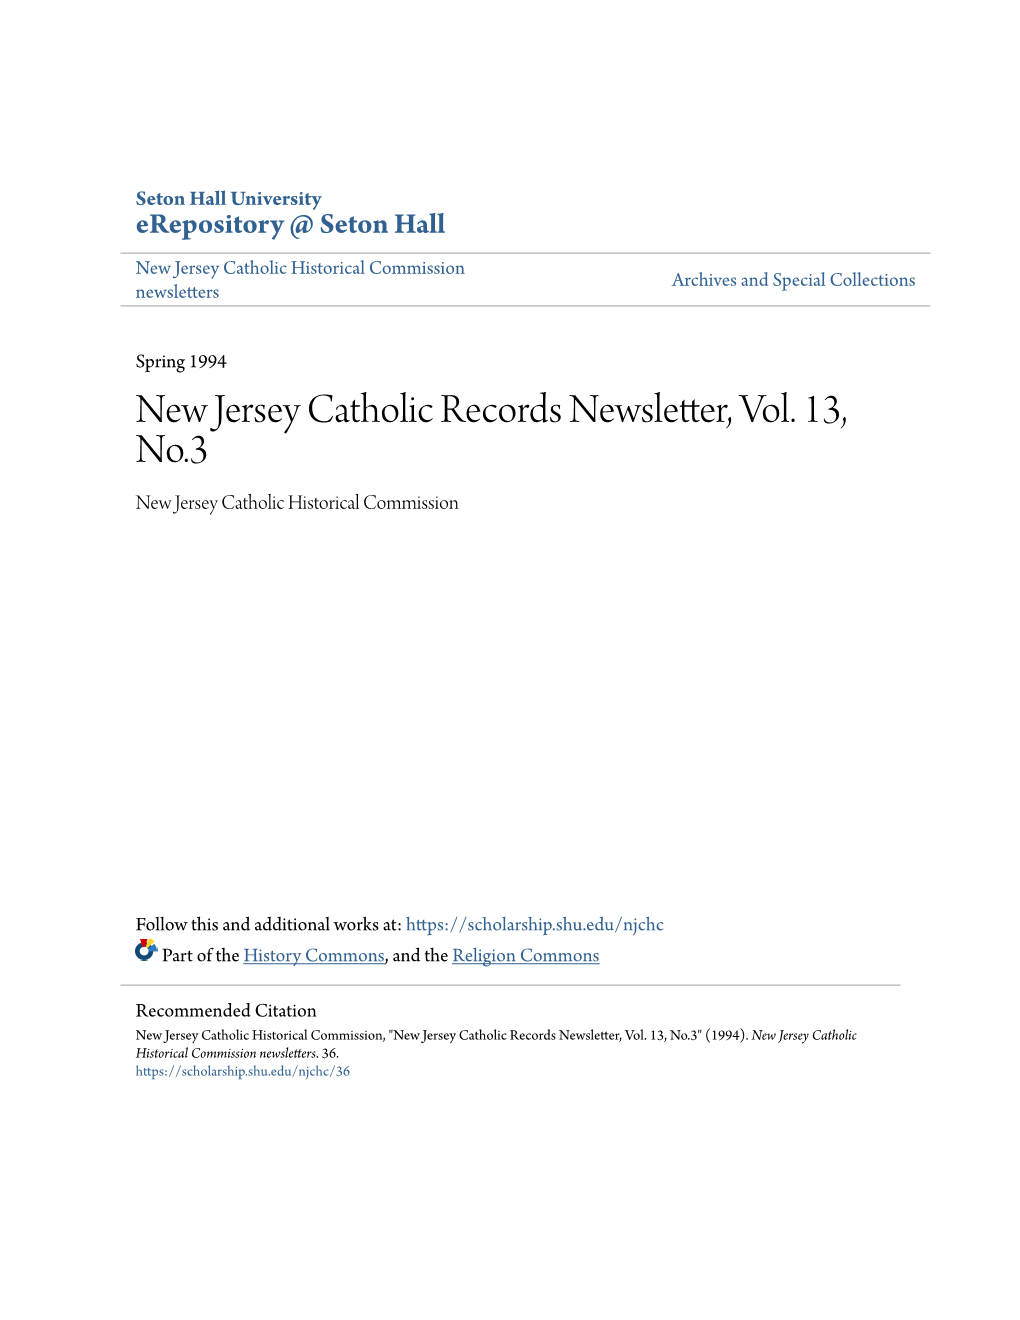 New Jersey Catholic Records Newsletter, Vol. 13, No.3 New Jersey Catholic Historical Commission